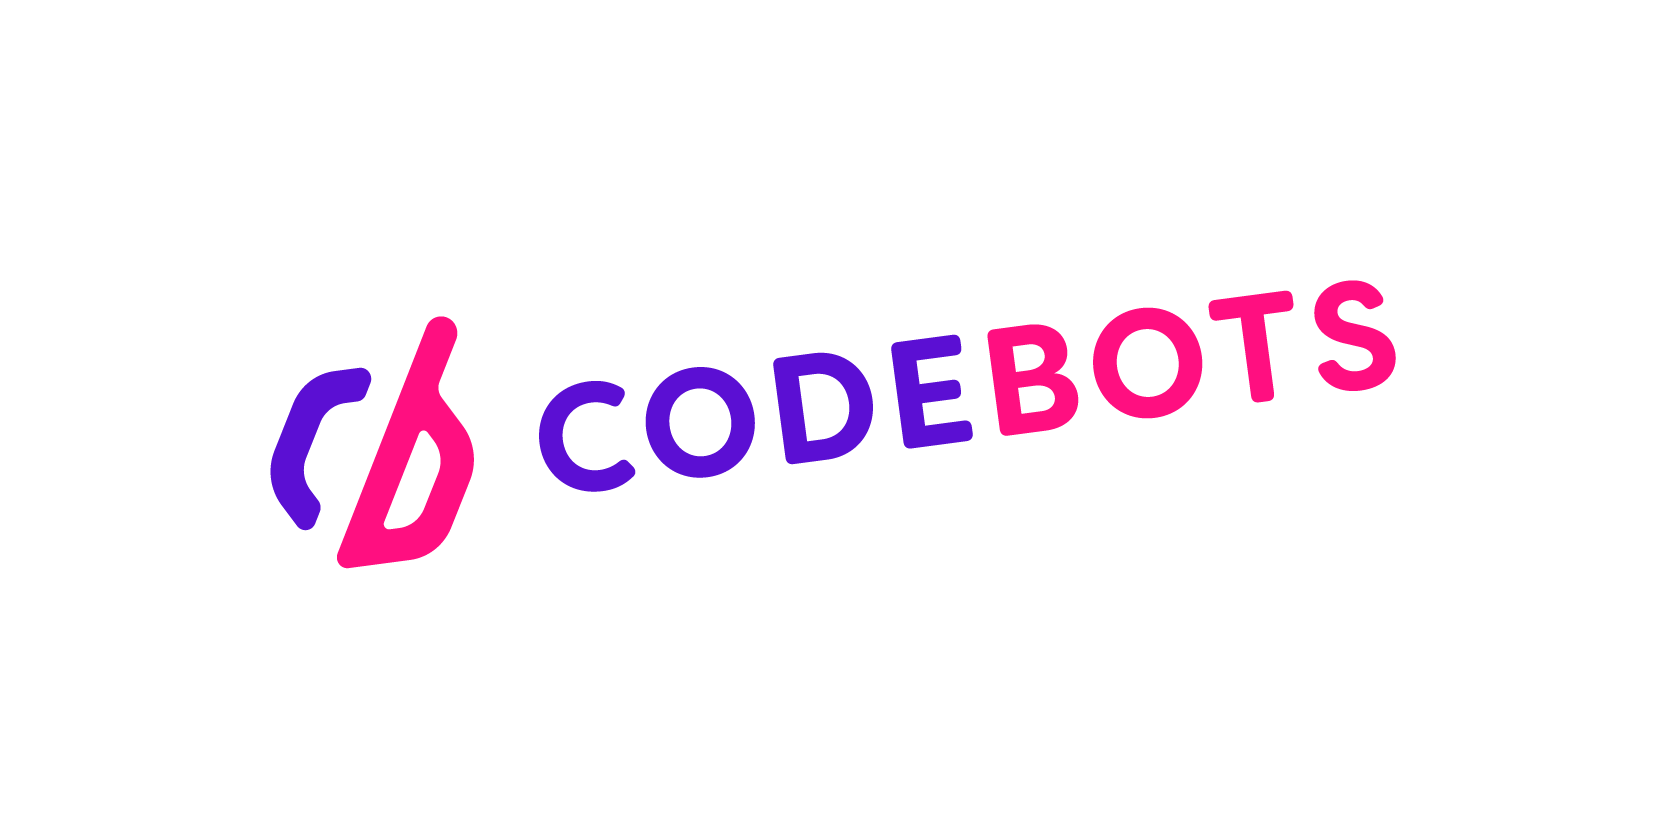 Codebots orientation logo